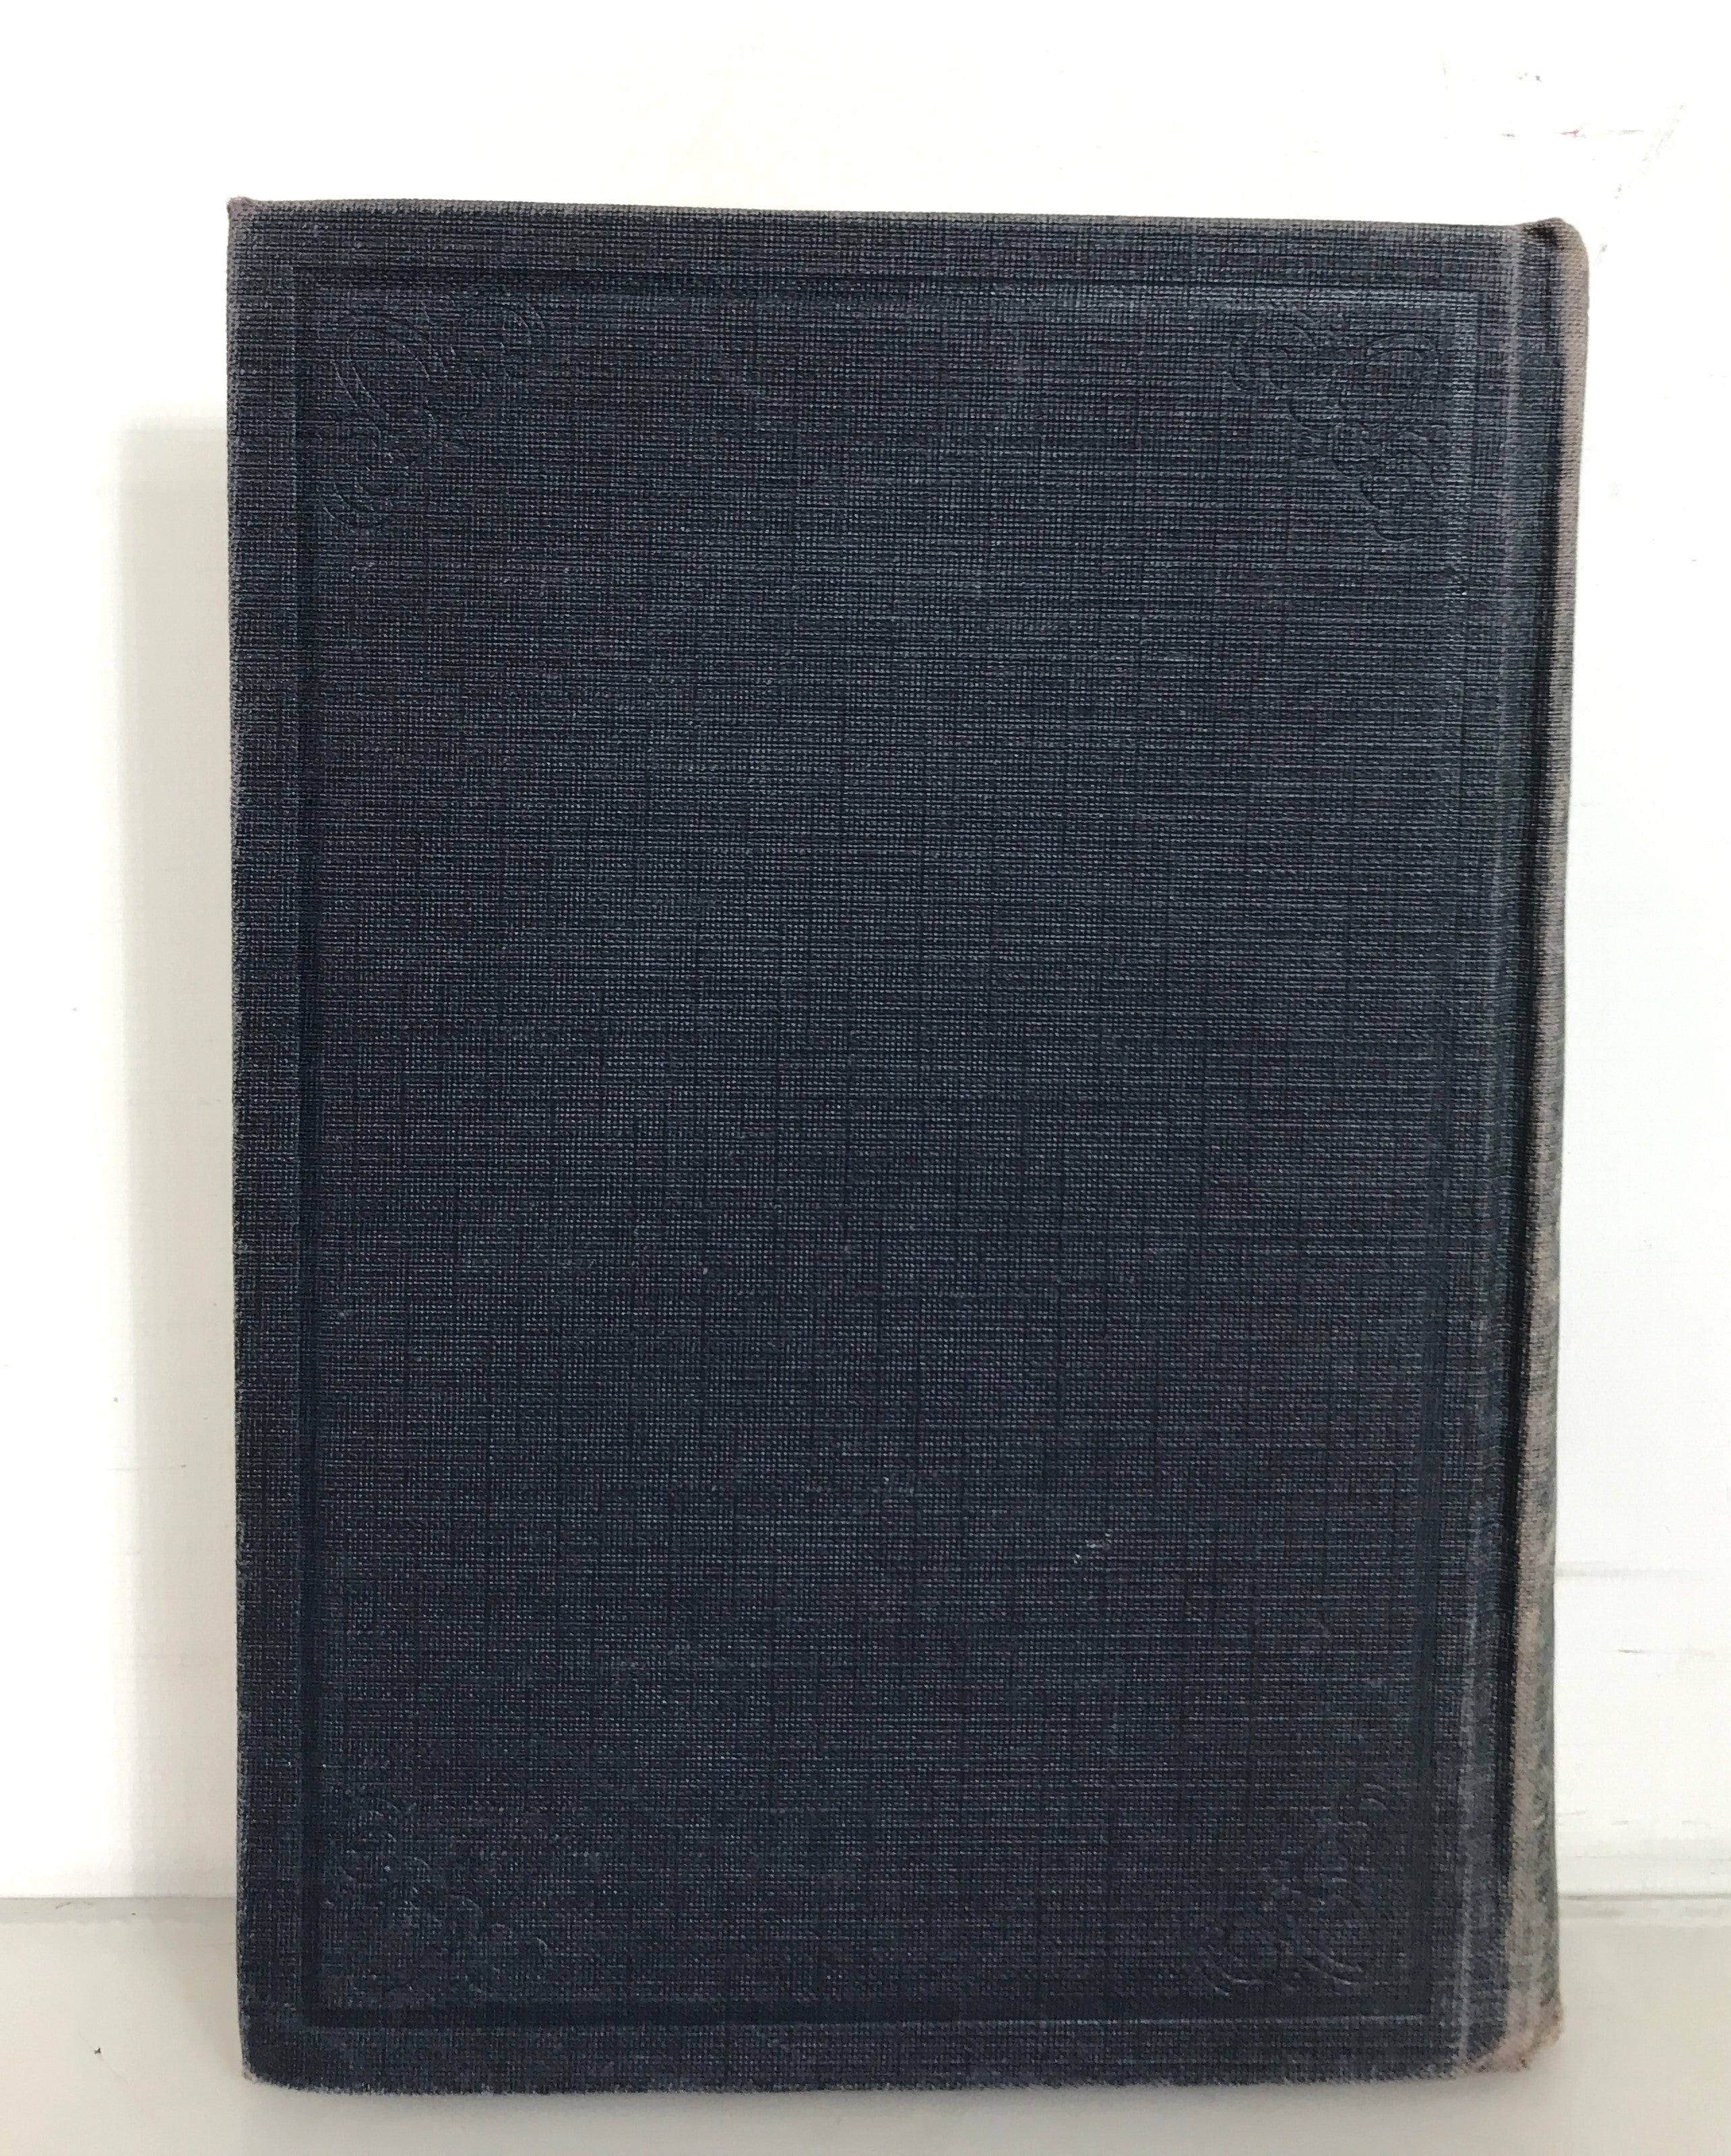 Jesus the Christ by James Talmage Seventeenth Edition 1948 HC